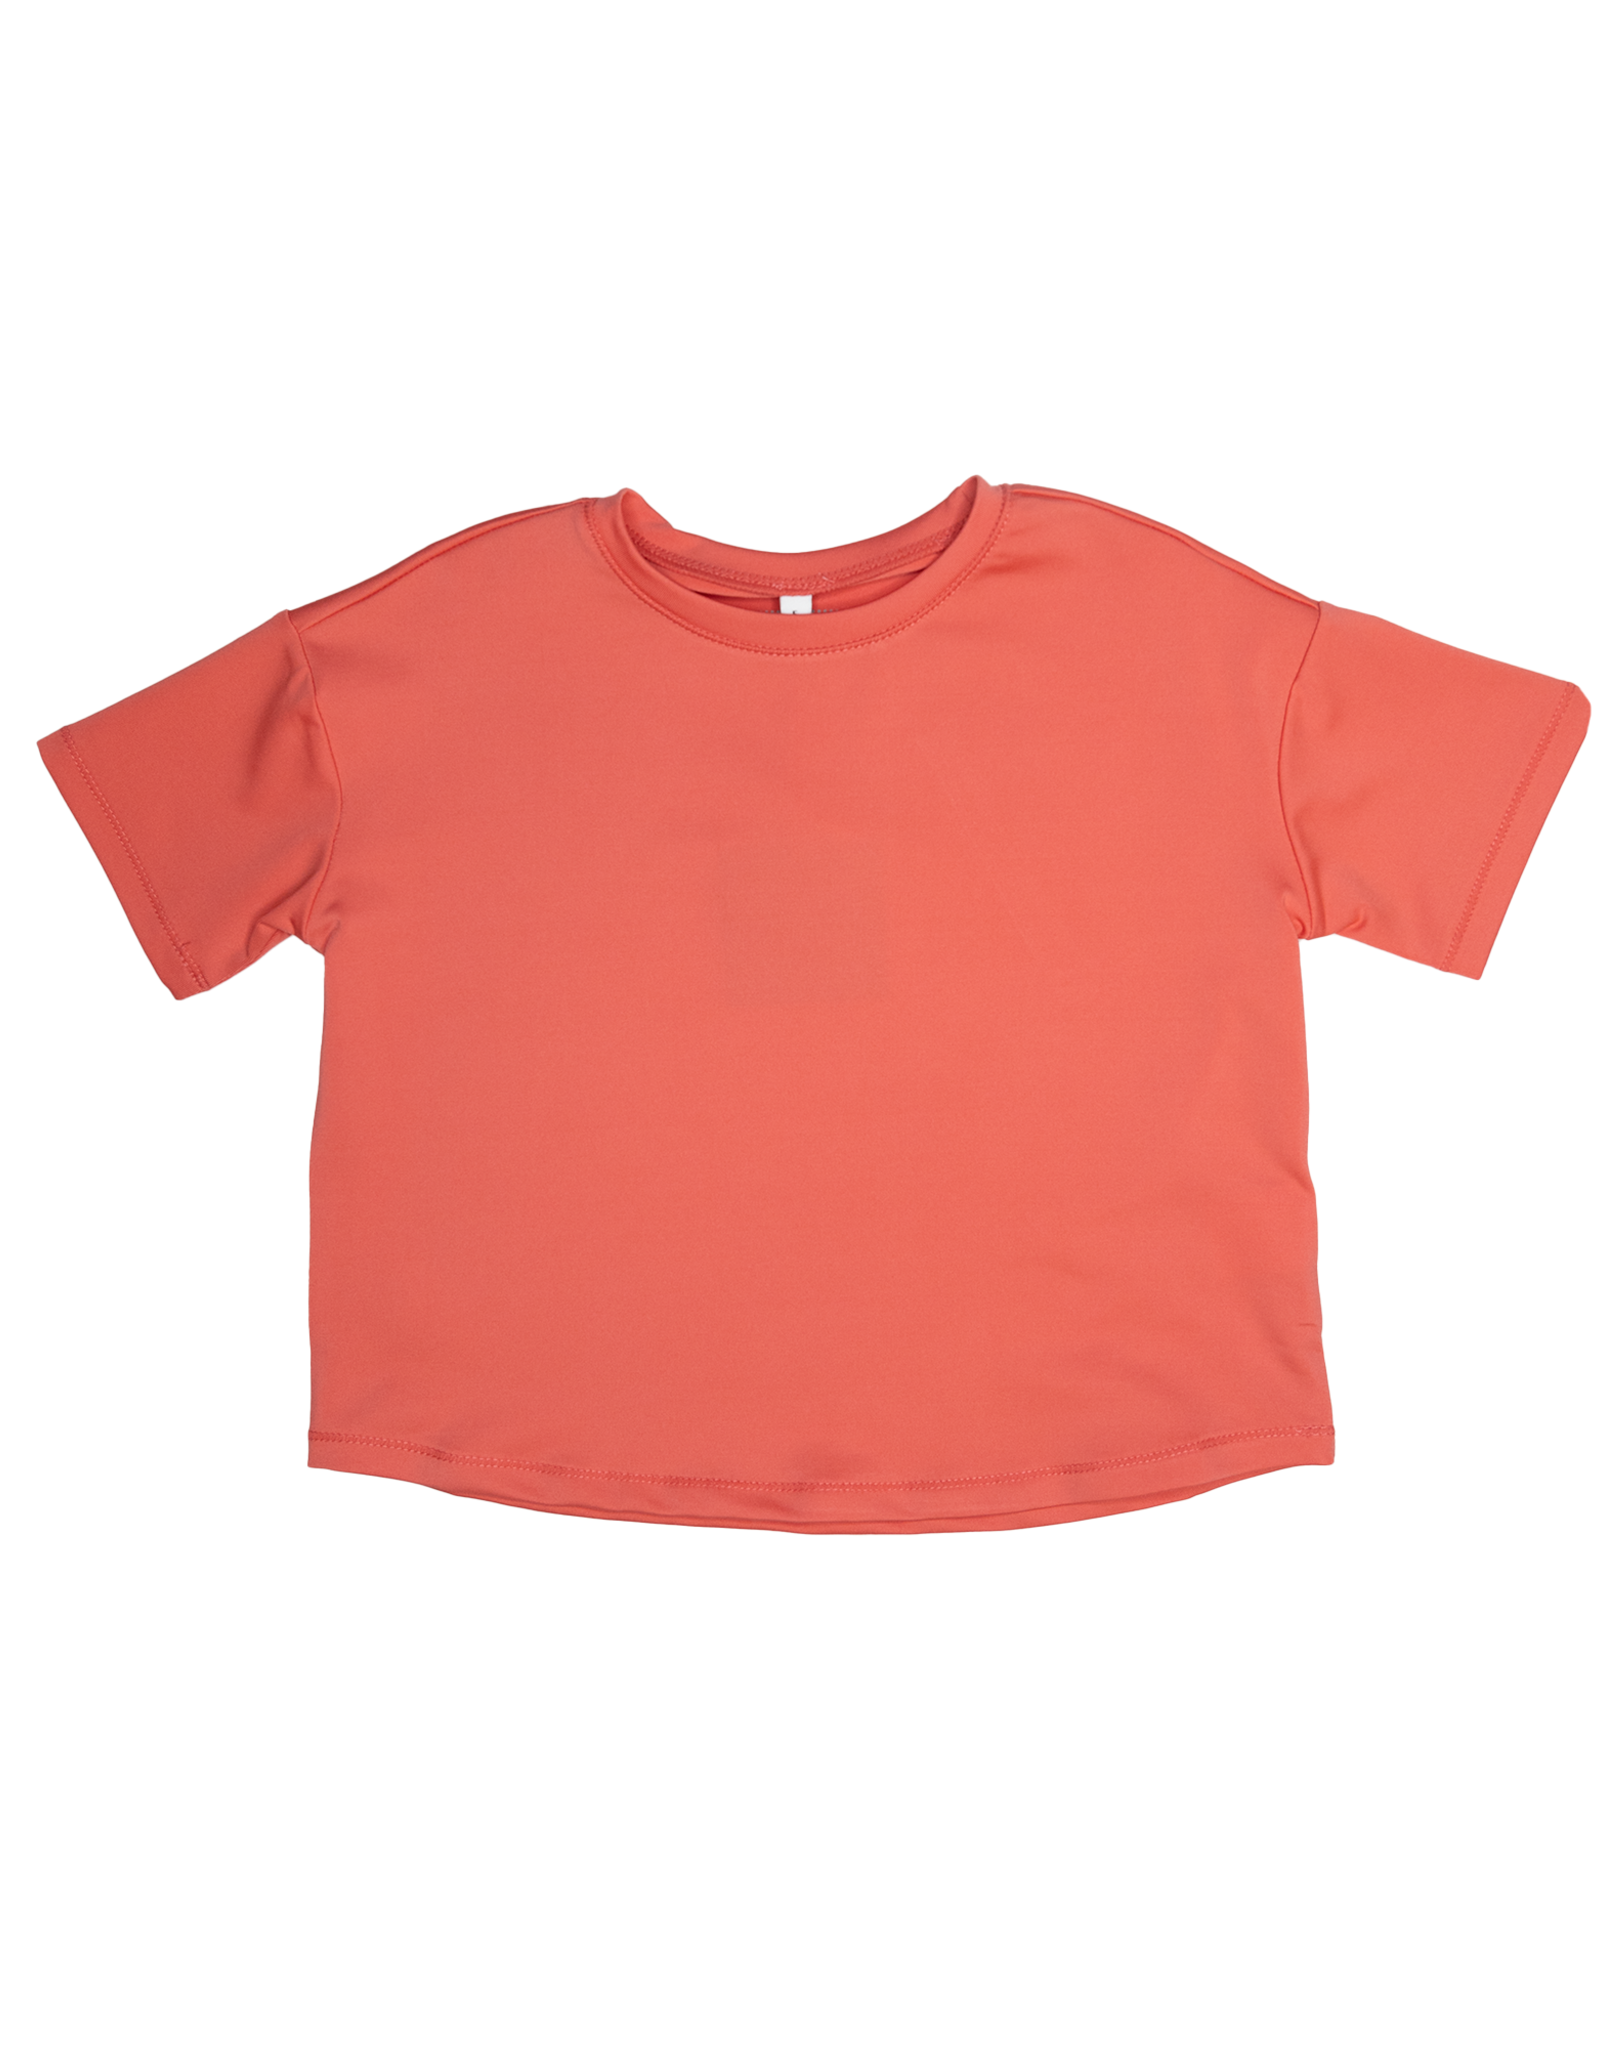 Honesty Kids 8623 Coral Box Shirt